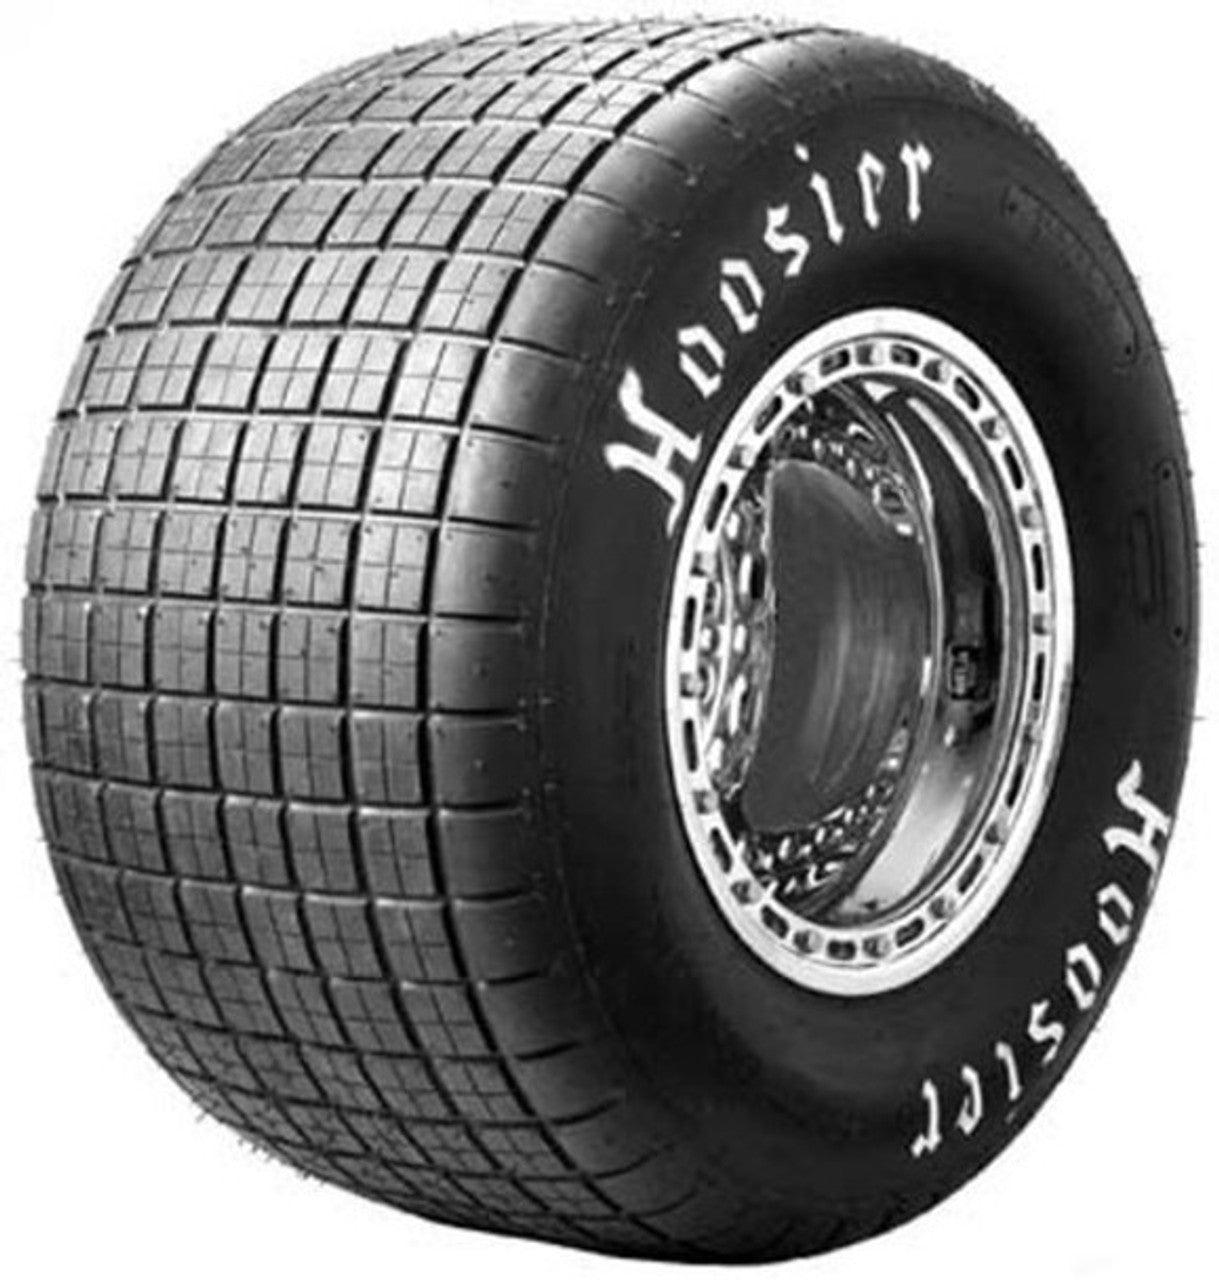 LM Dirt Tire LCB NLMT2.25 90.0/11.0-15 - Burlile Performance Products